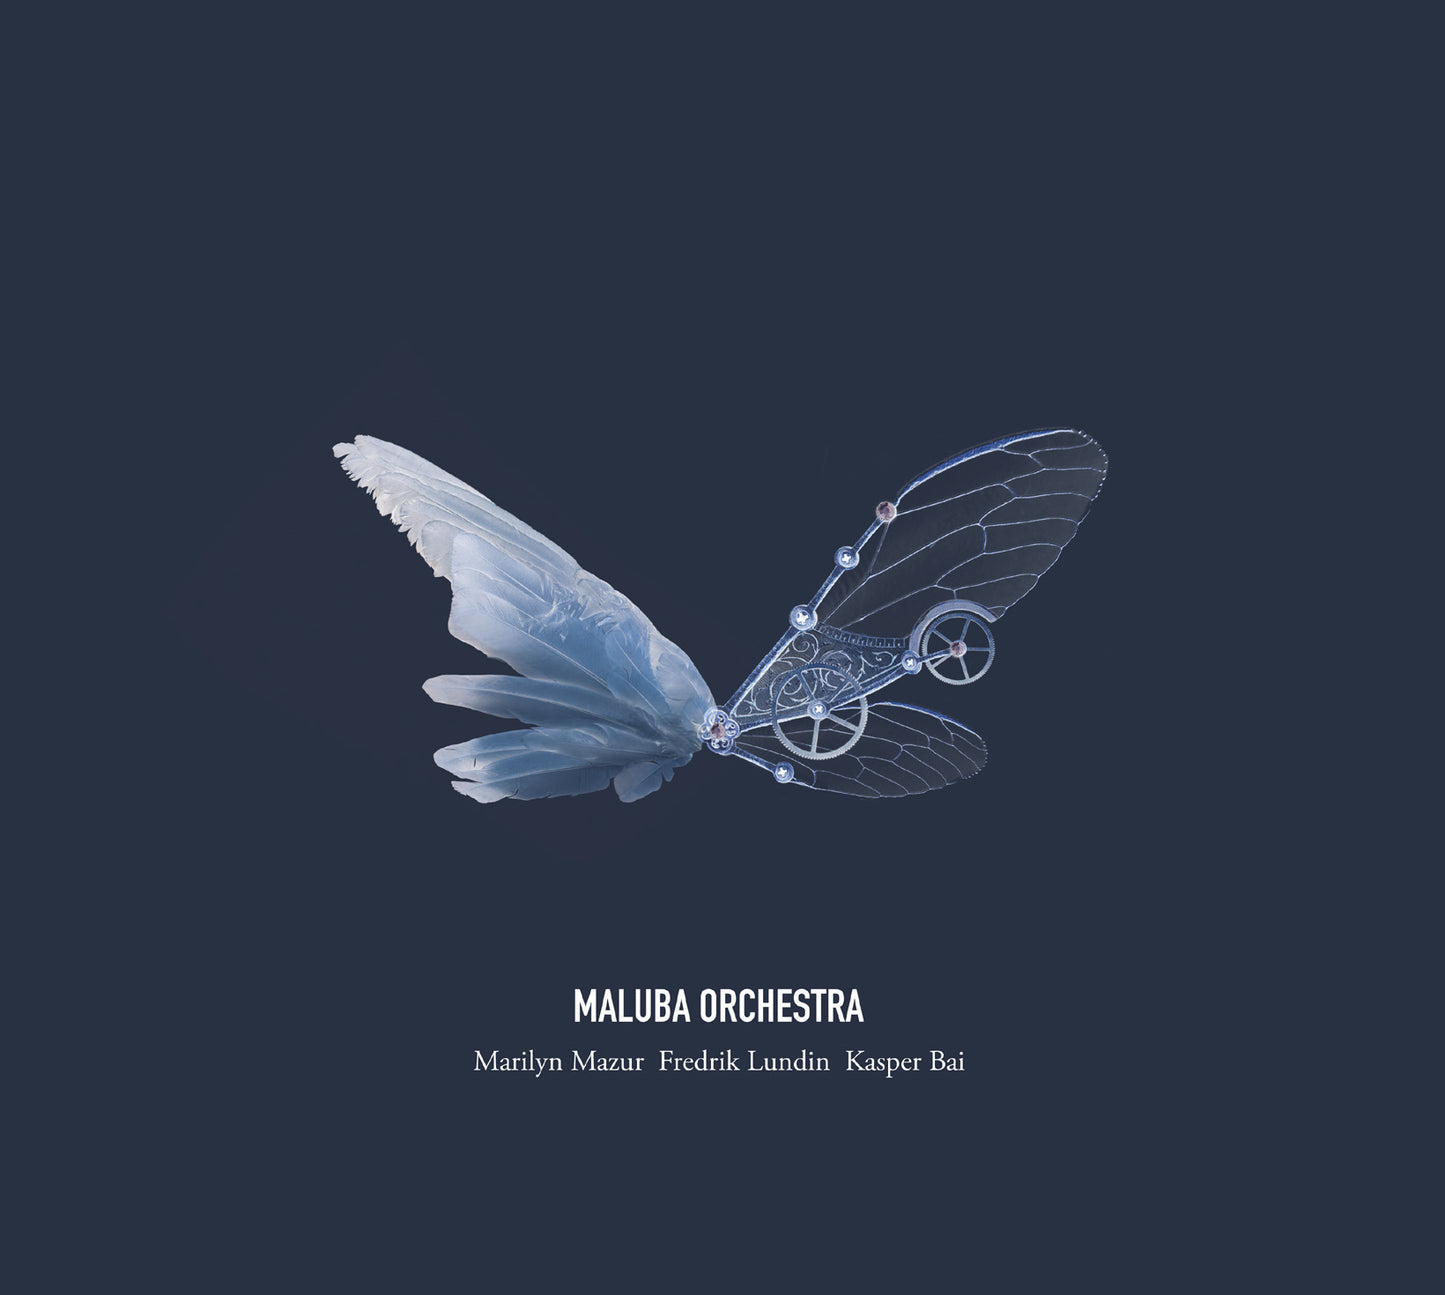 MaLuBa Orchestra - Marilyn Mazur/Fredrik Lundin/Kasper Bai